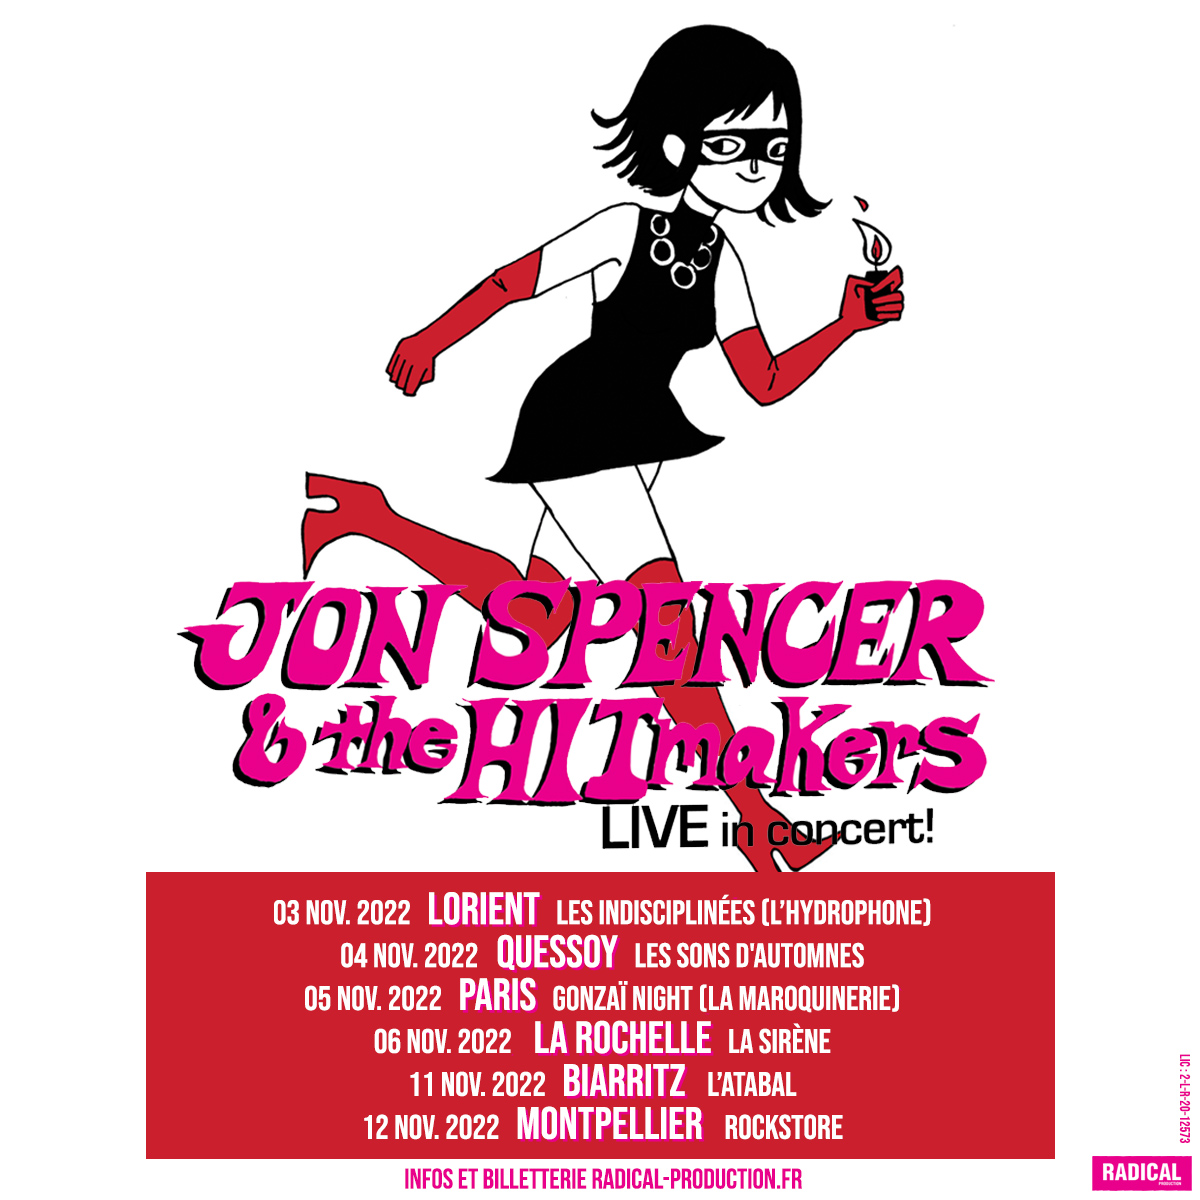 Jon Spencer & the HITmakers Concerts France Novembre 2022